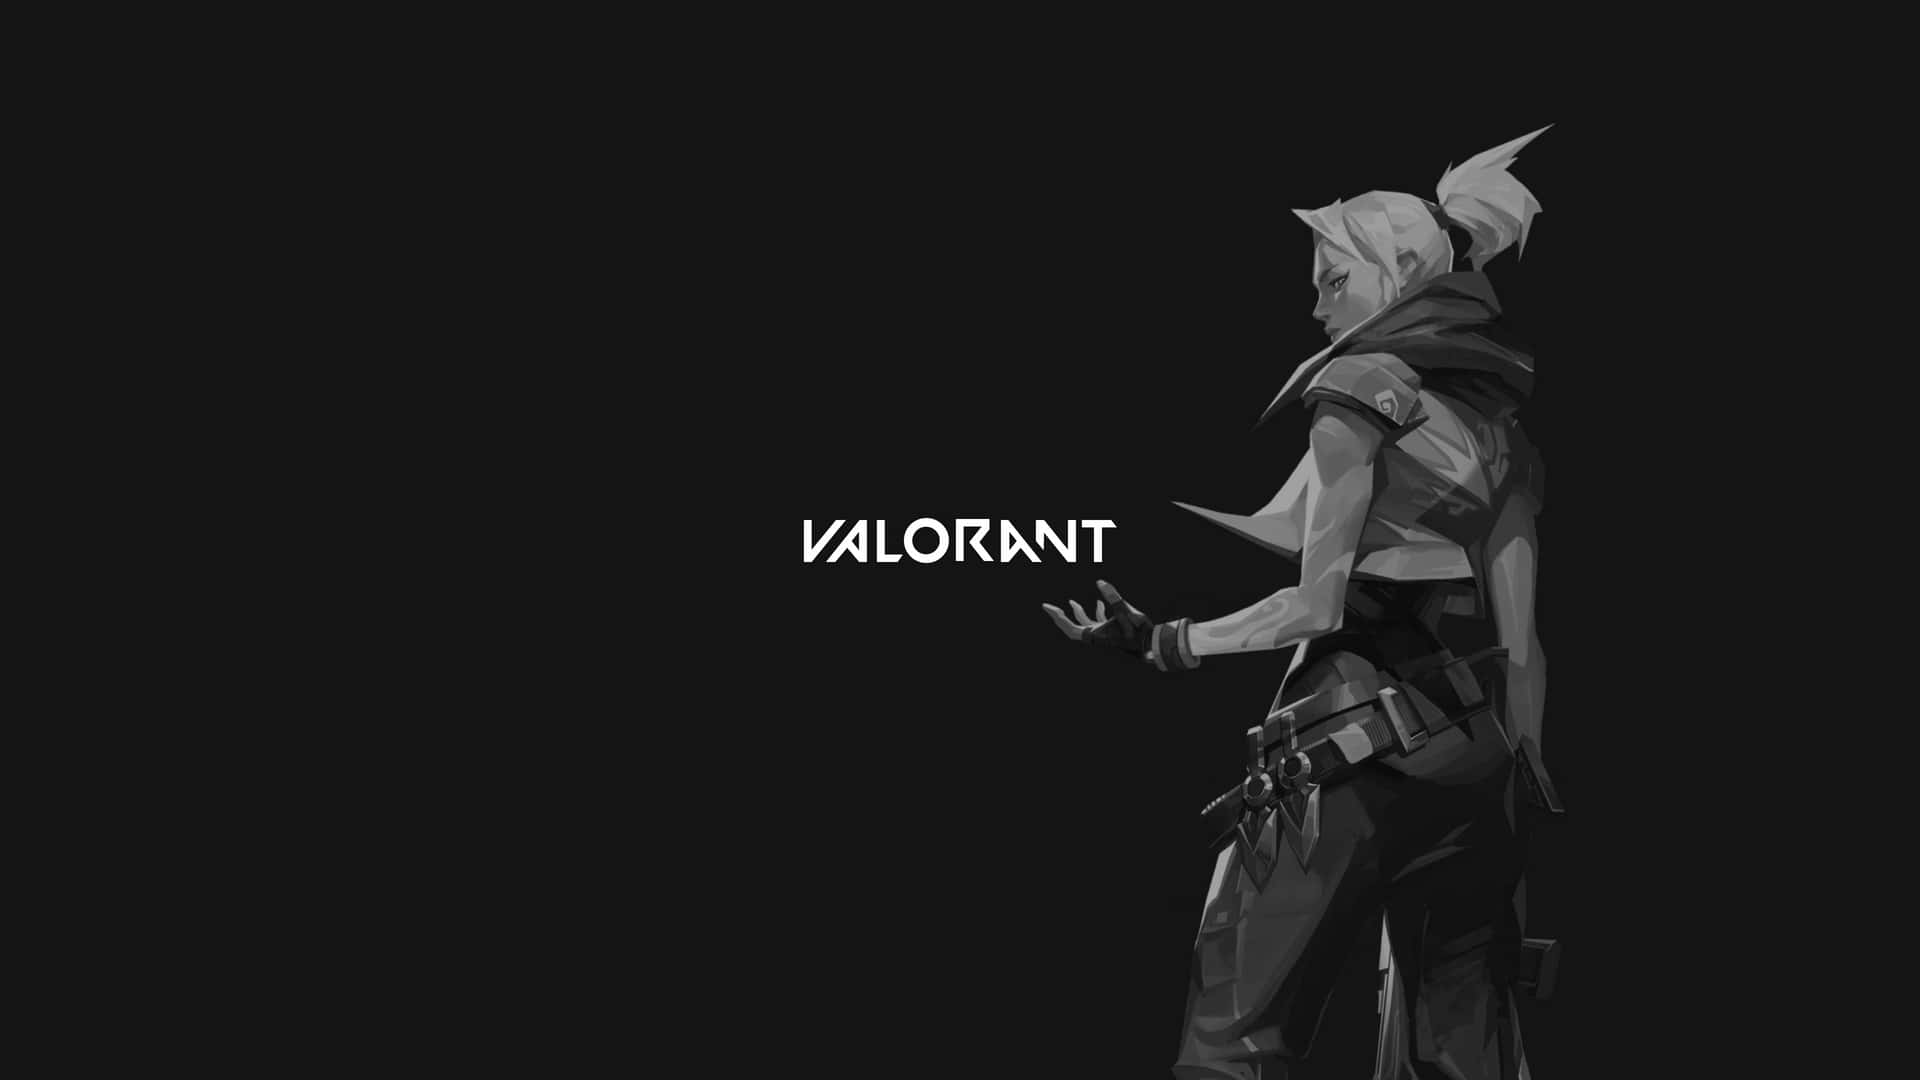 500+] Valorant Backgrounds